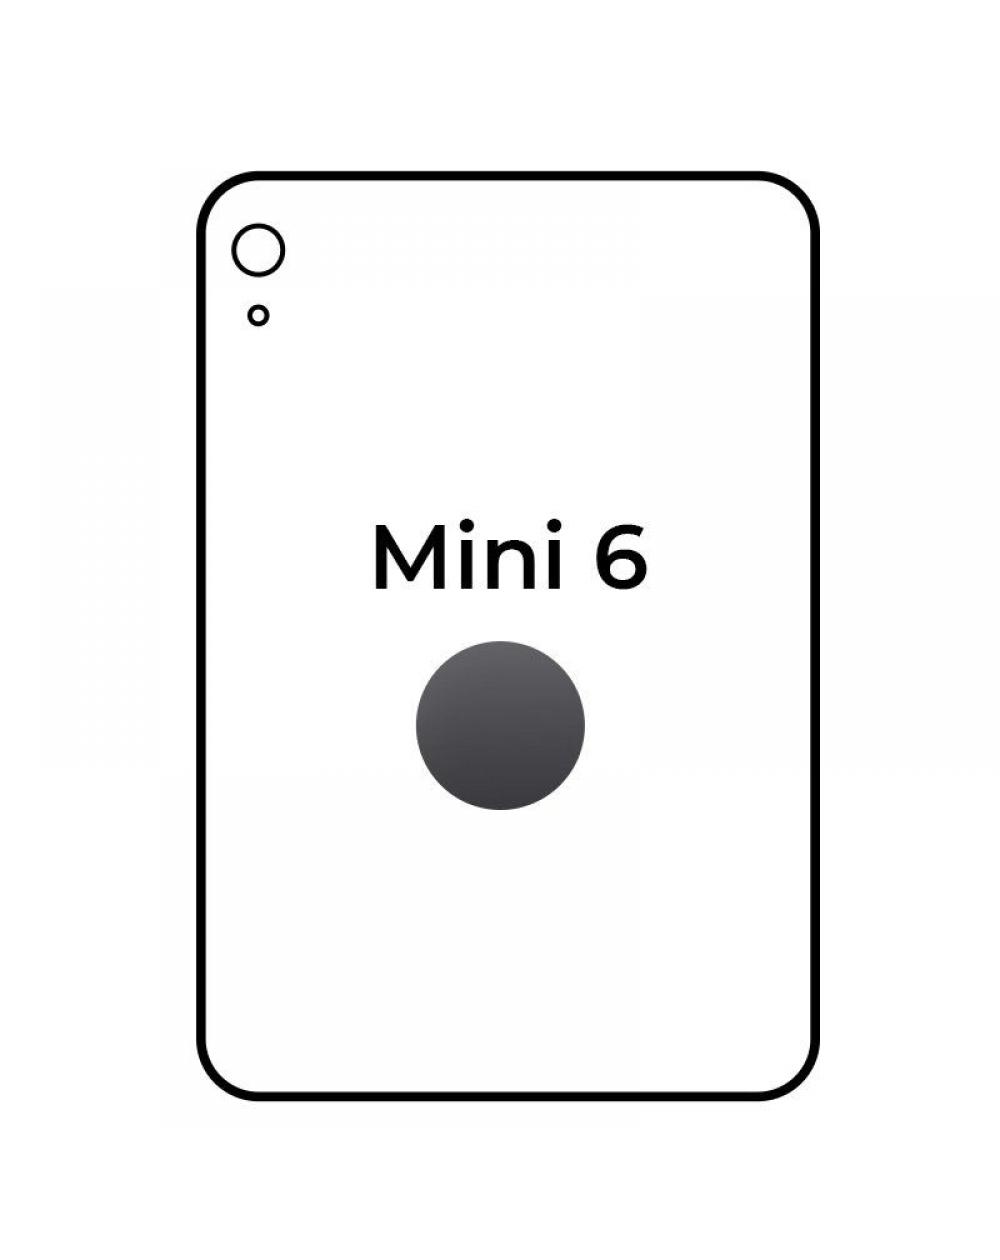 iPad Mini 8.3 2021 WiFi/ A15 Bionic/ 64GB/ Gris Espacial - MK7M3TY/A - Imagen 1